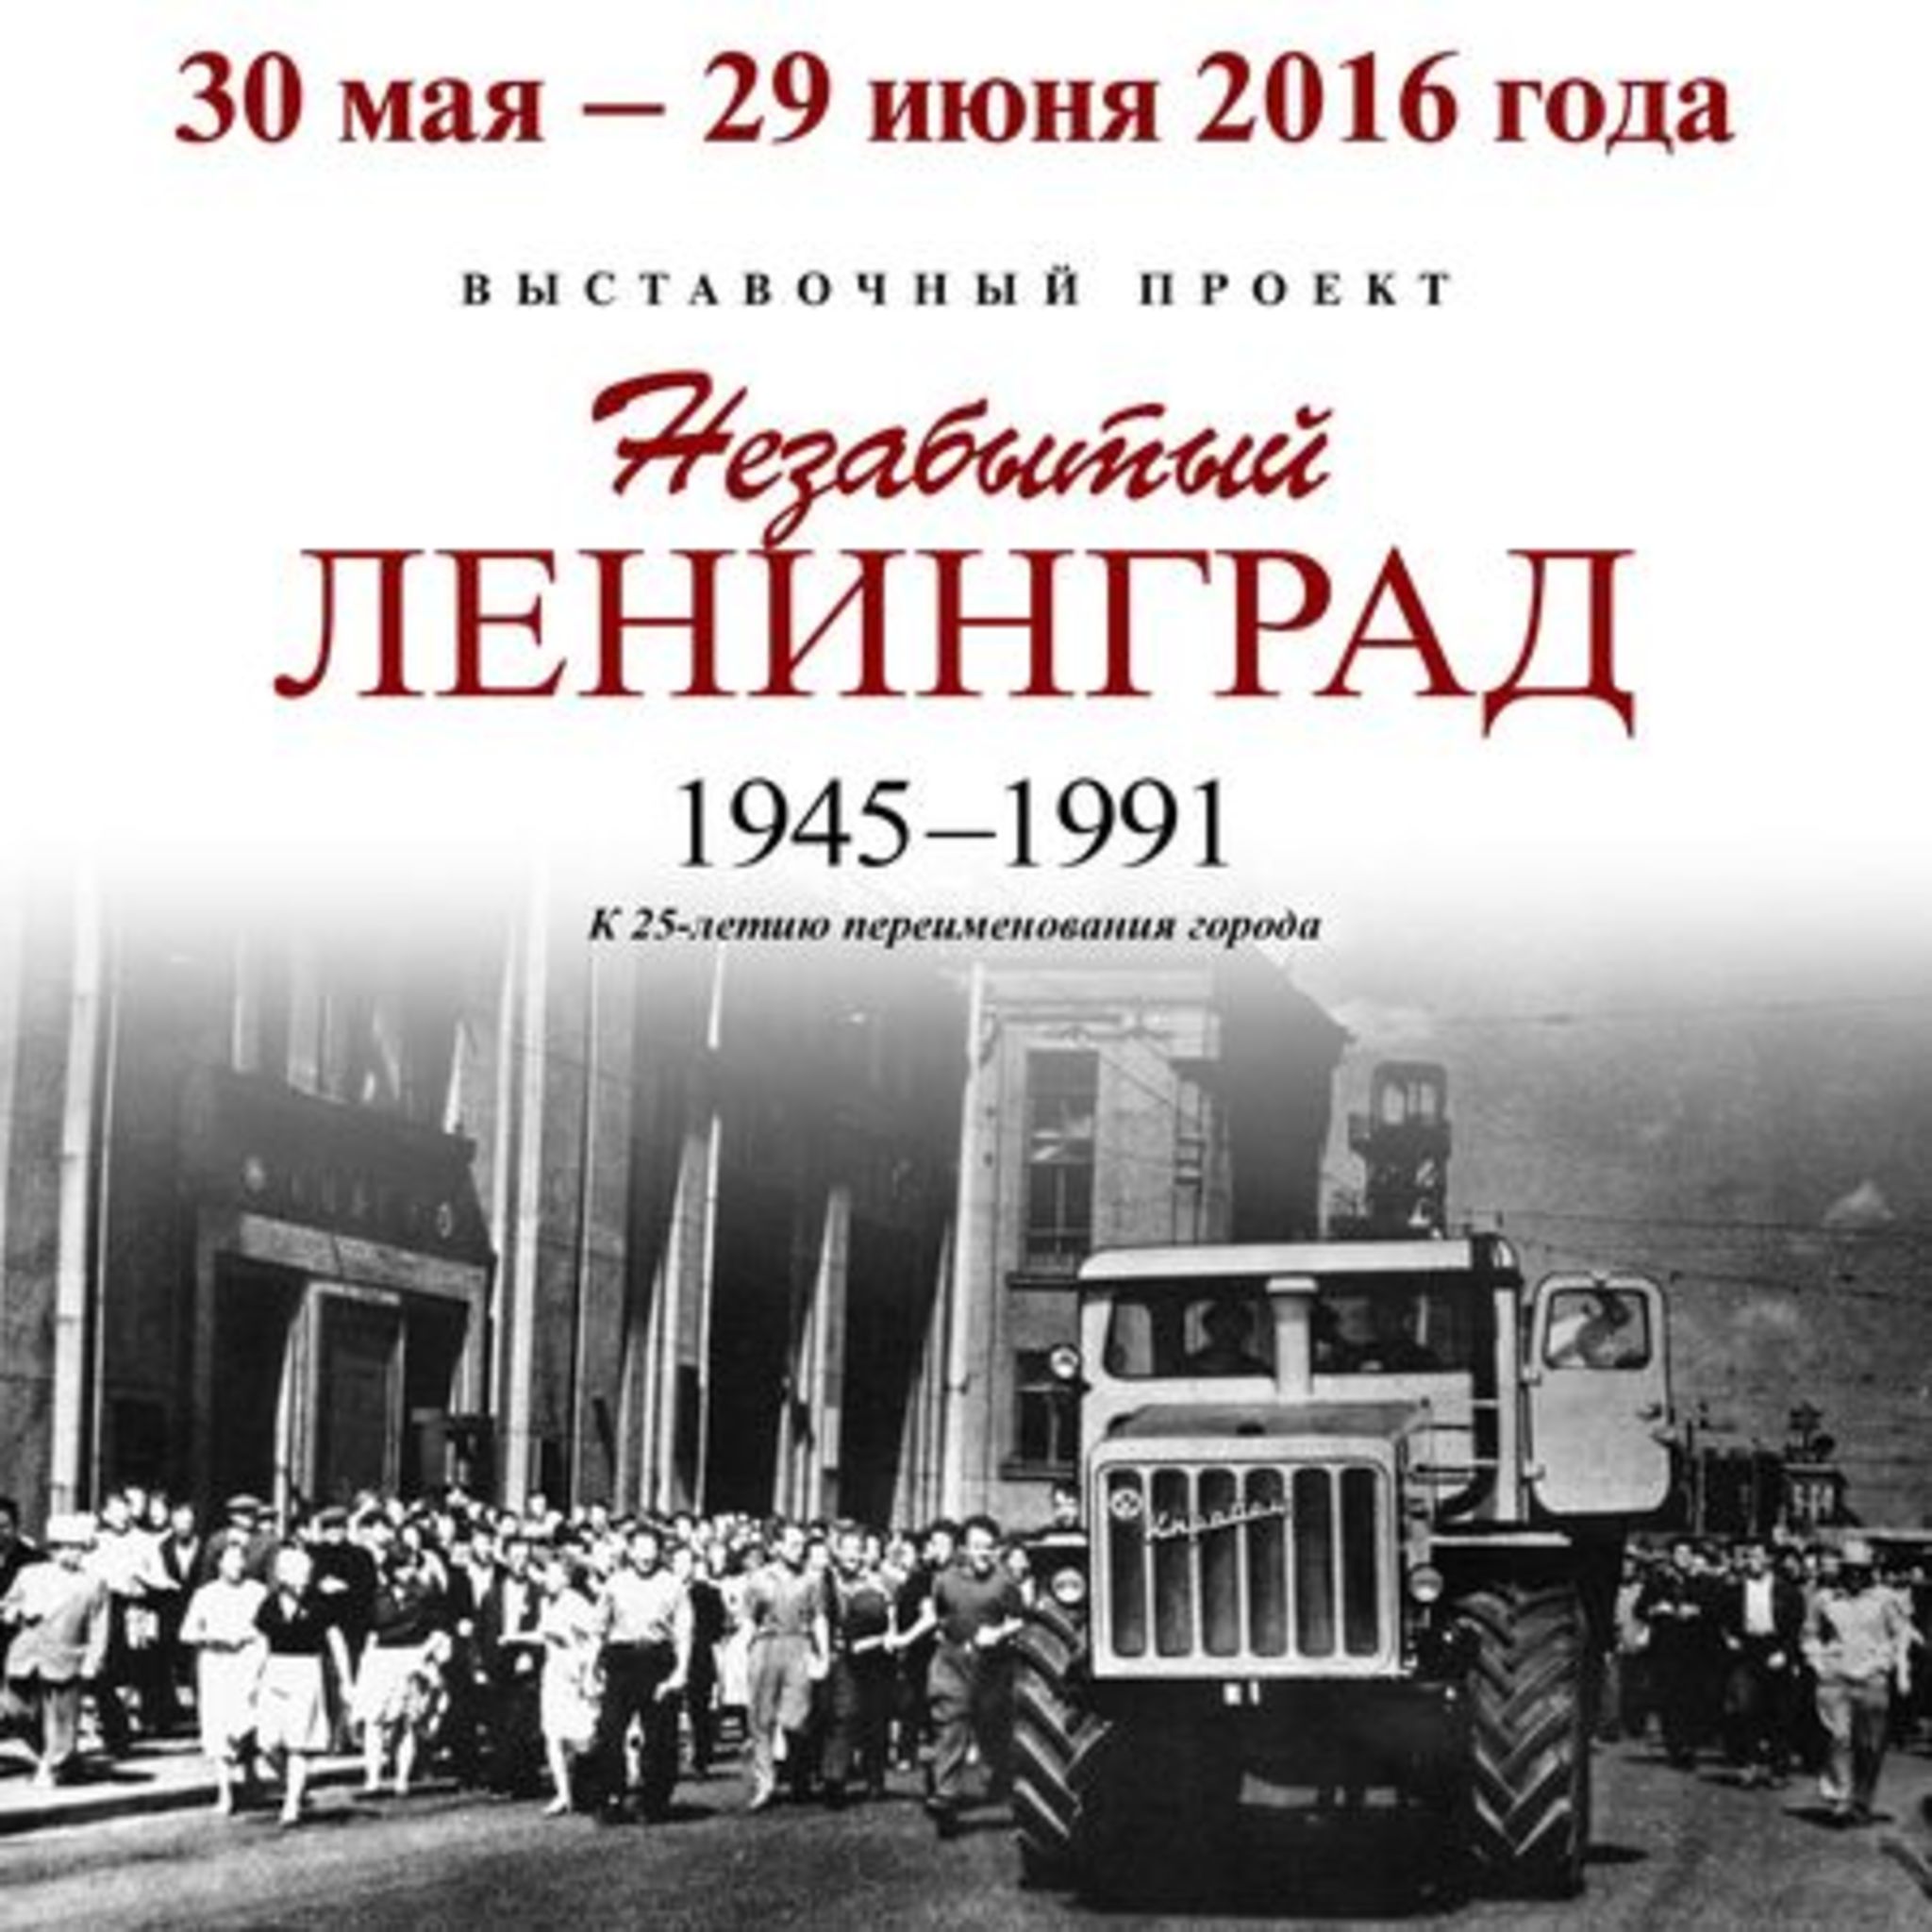 Exhibition project Unforgotten Leningrad. 1945-1991